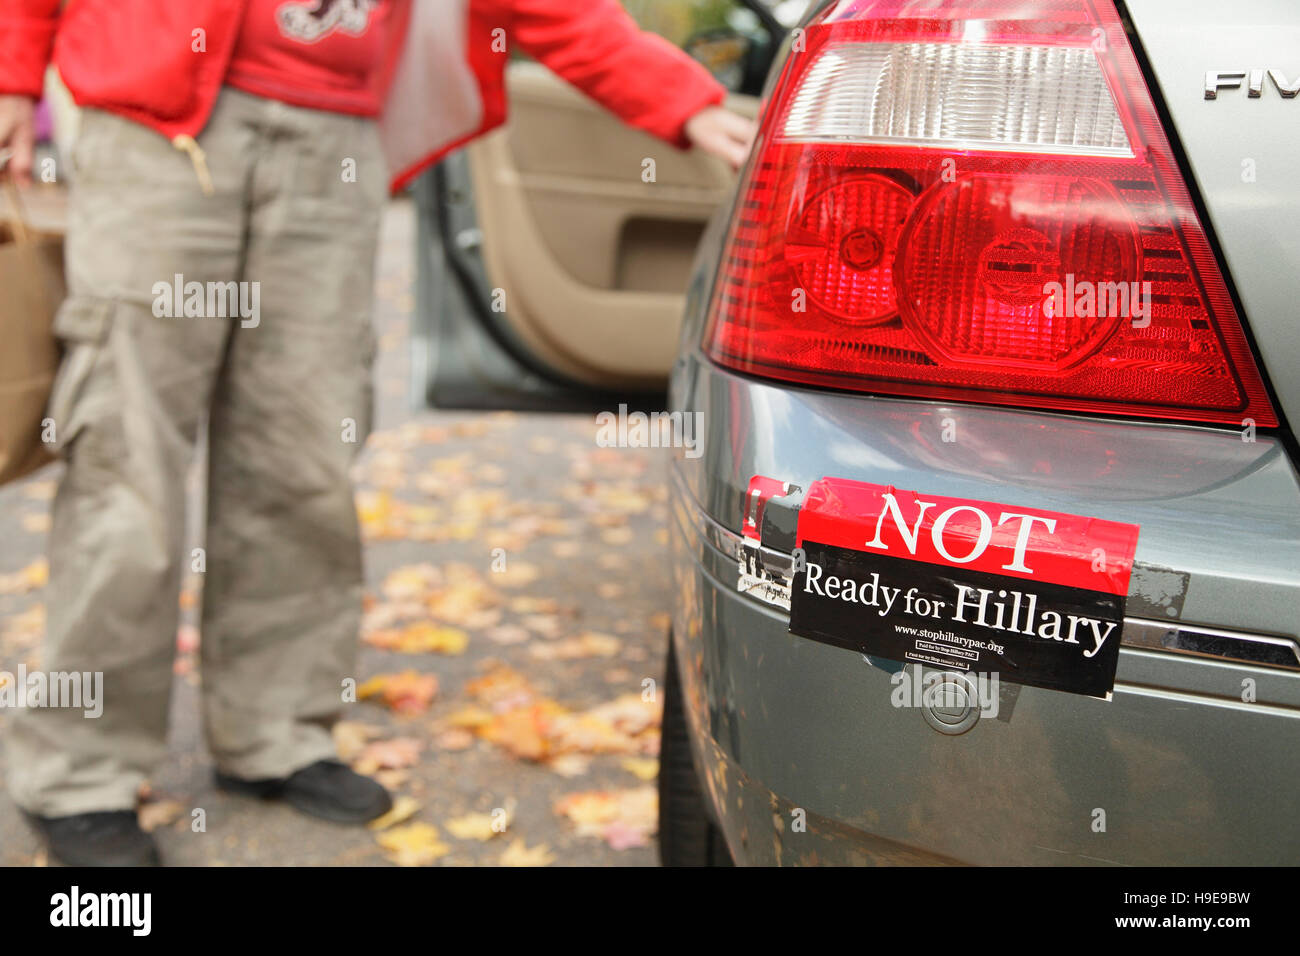 'Not Ready for Hillary' bumper sticker, North Carolina, USA Stock Photo